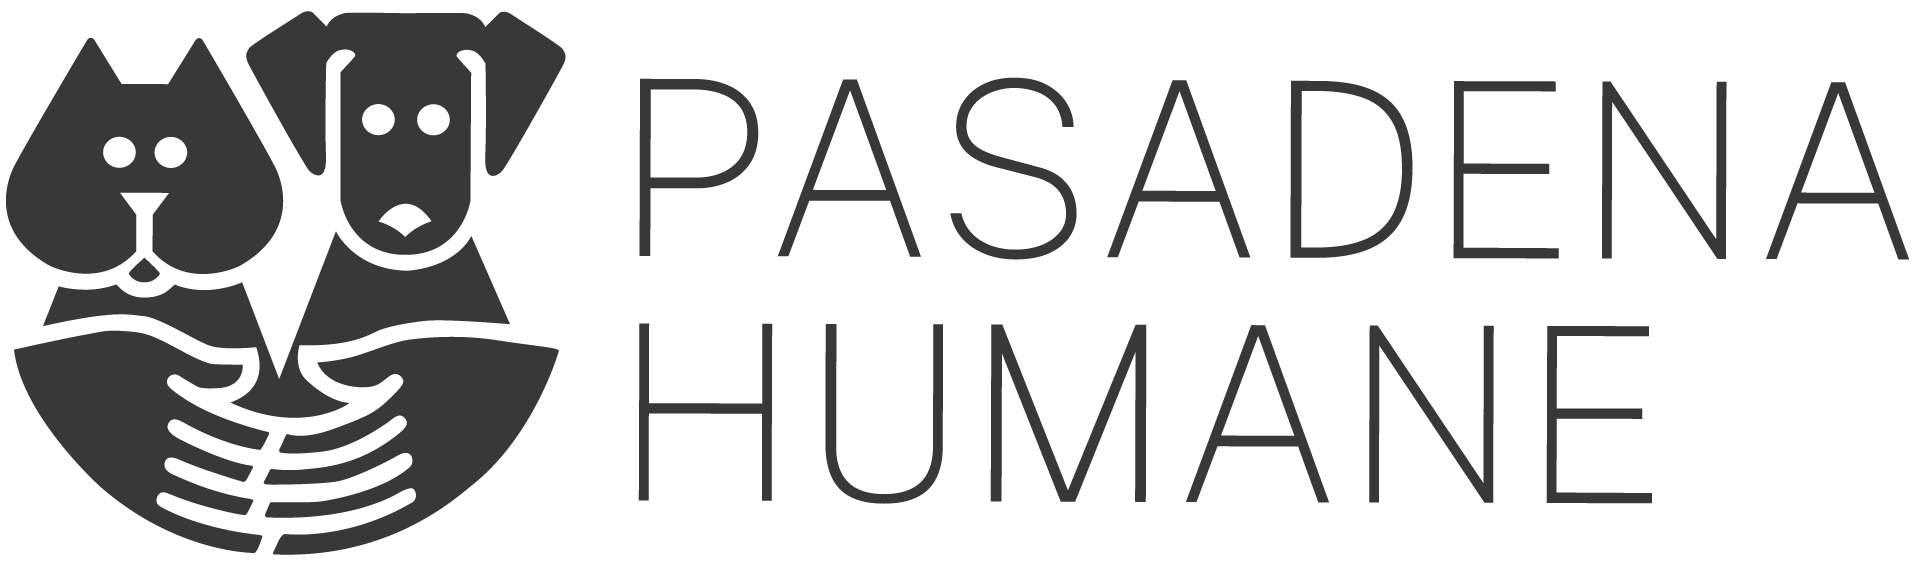 Pasadena Humane Society